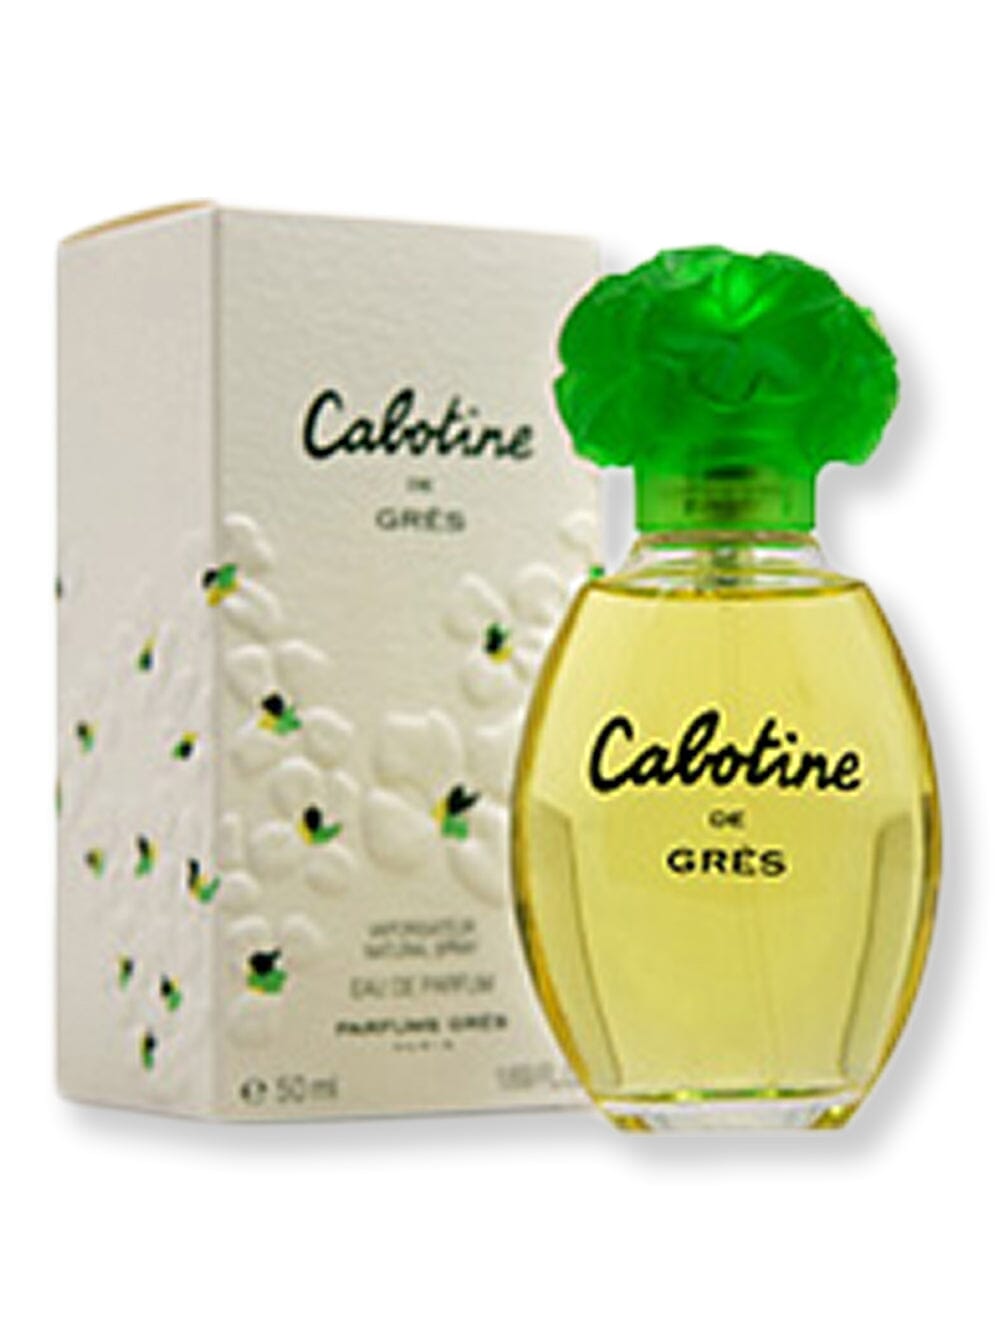 Gres Gres Cabotine EDP Spray 1.7 oz Perfume 